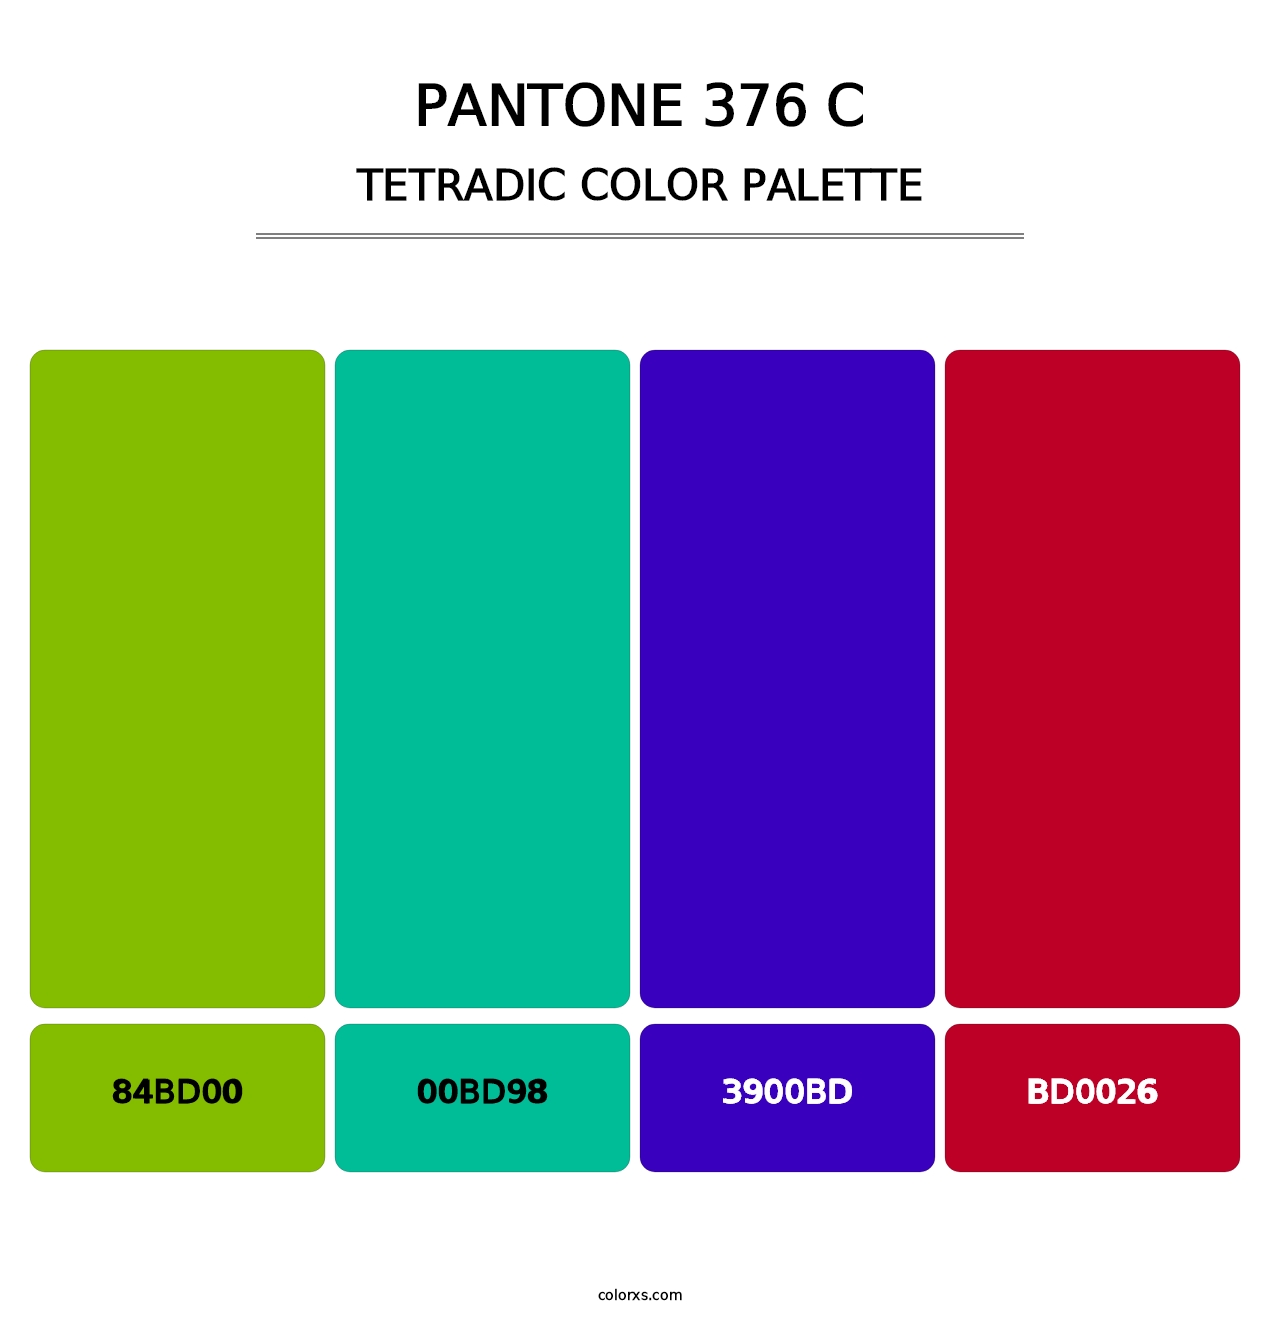 PANTONE 376 C - Tetradic Color Palette